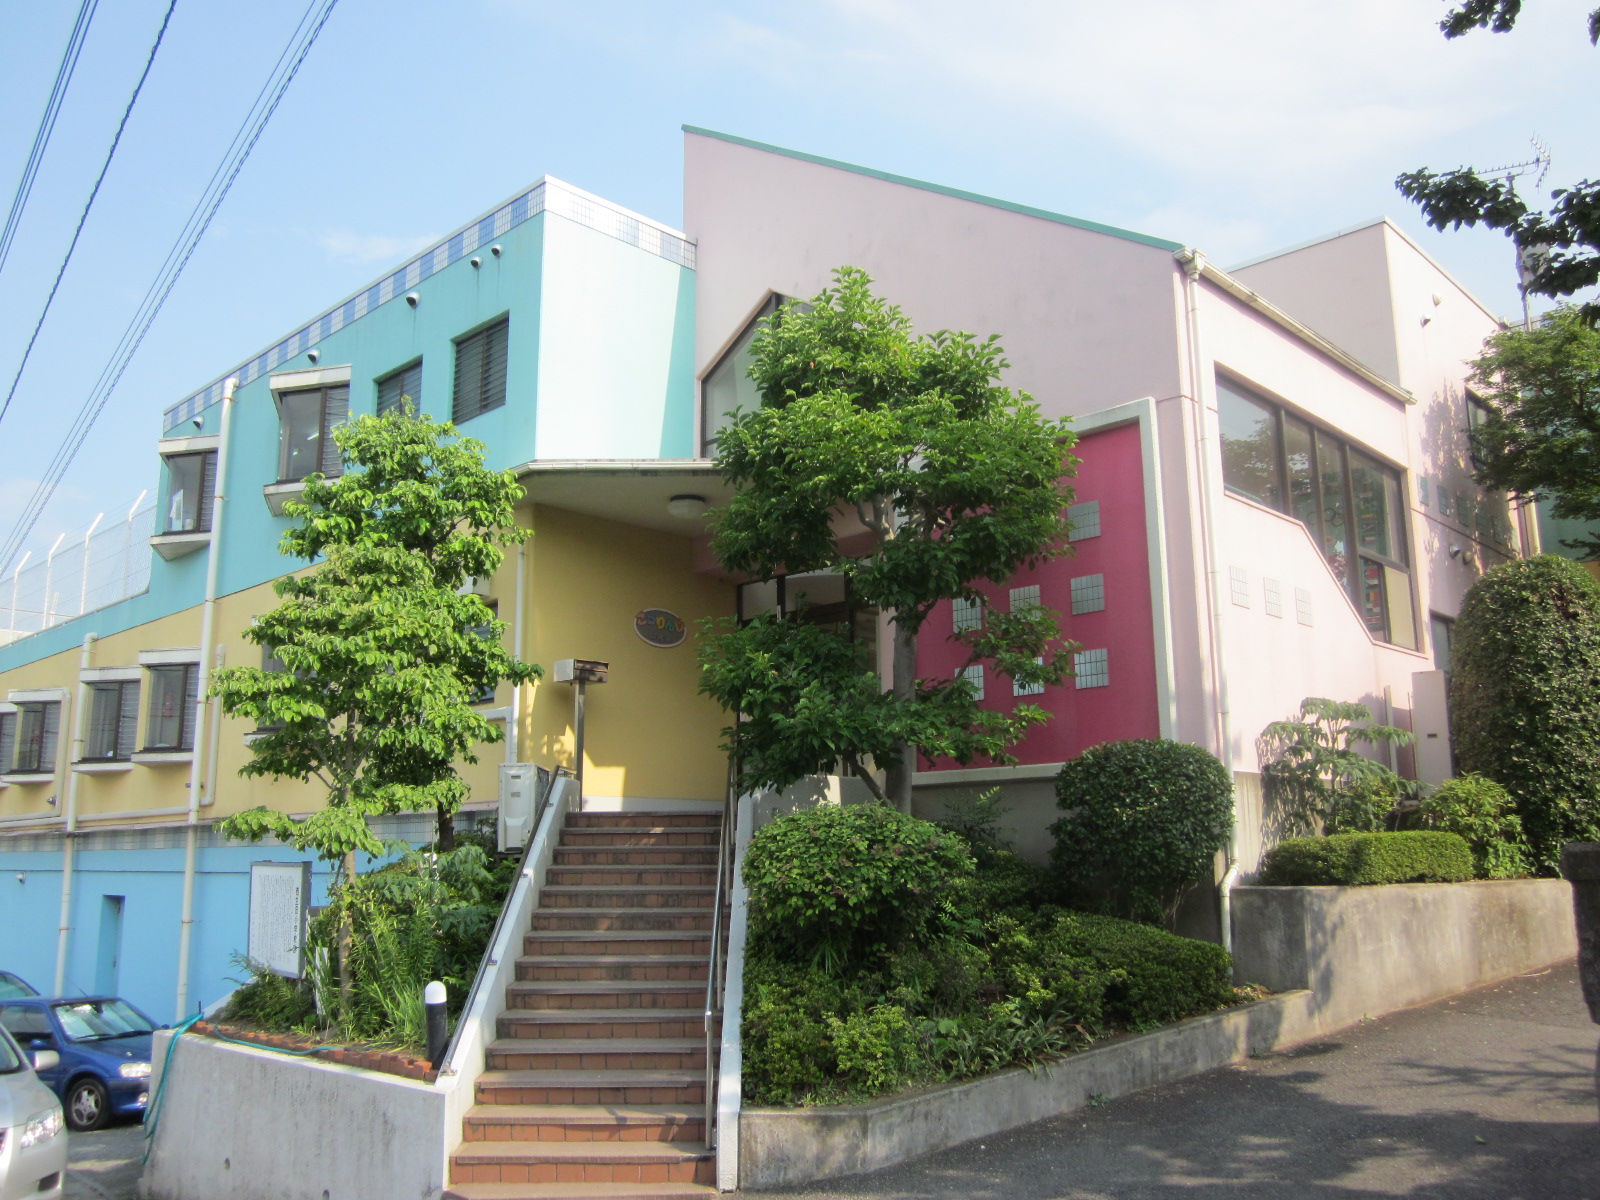 kindergarten ・ Nursery. Korinji kindergarten (kindergarten ・ 60m to the nursery)